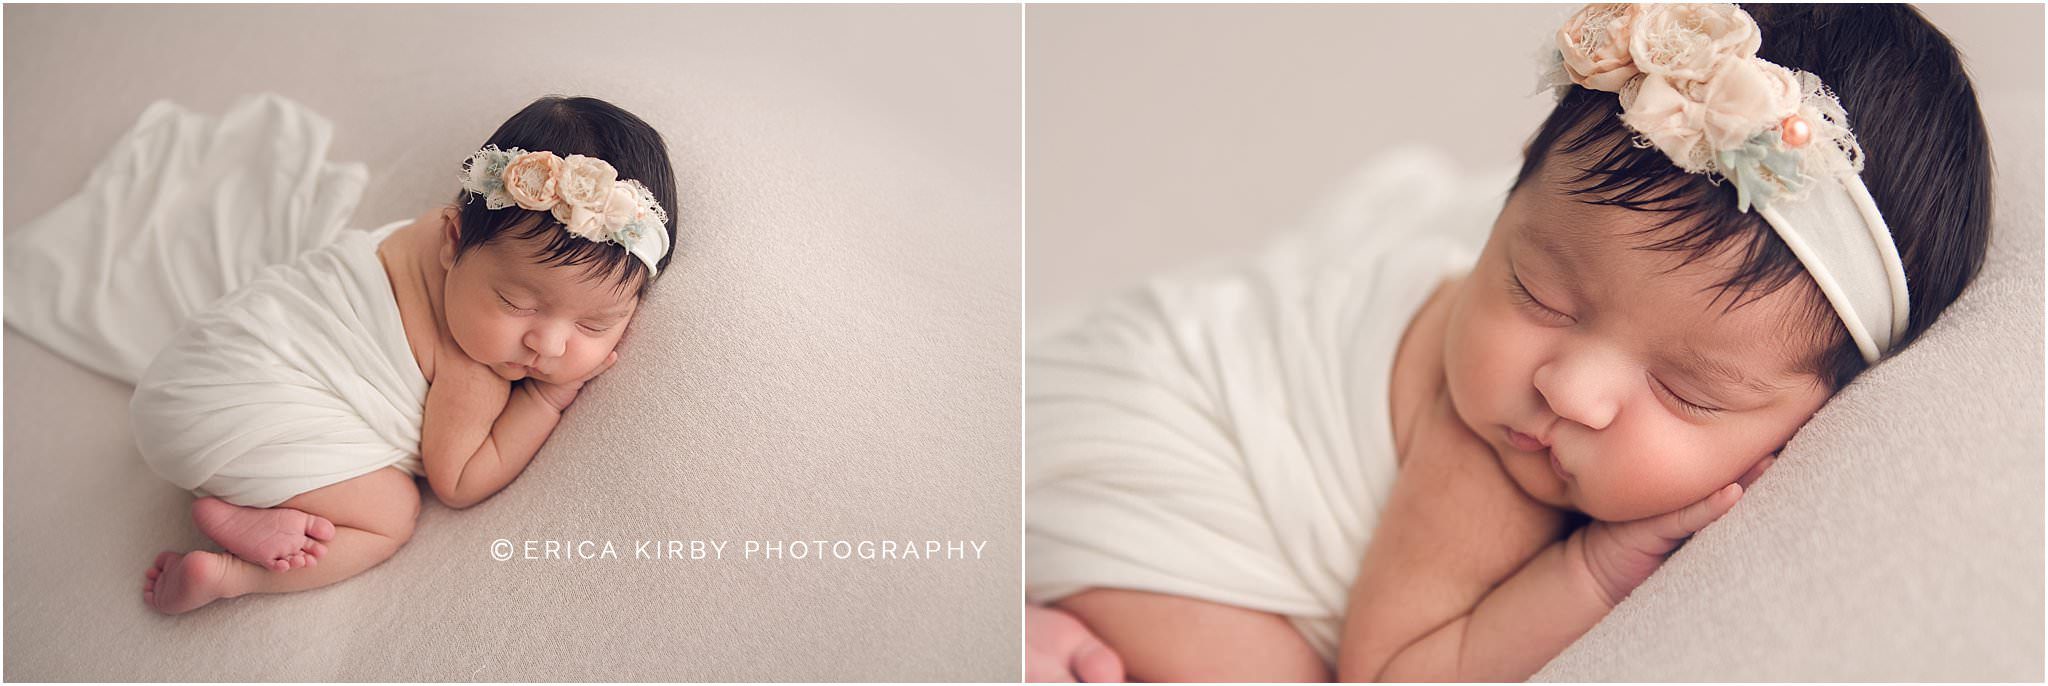 Newborn Baby Photographer Bentonville - hispanic newborn baby girl newborn session in northwest arkansas swaddled and sleeping - newborn photo session simple timeless poses